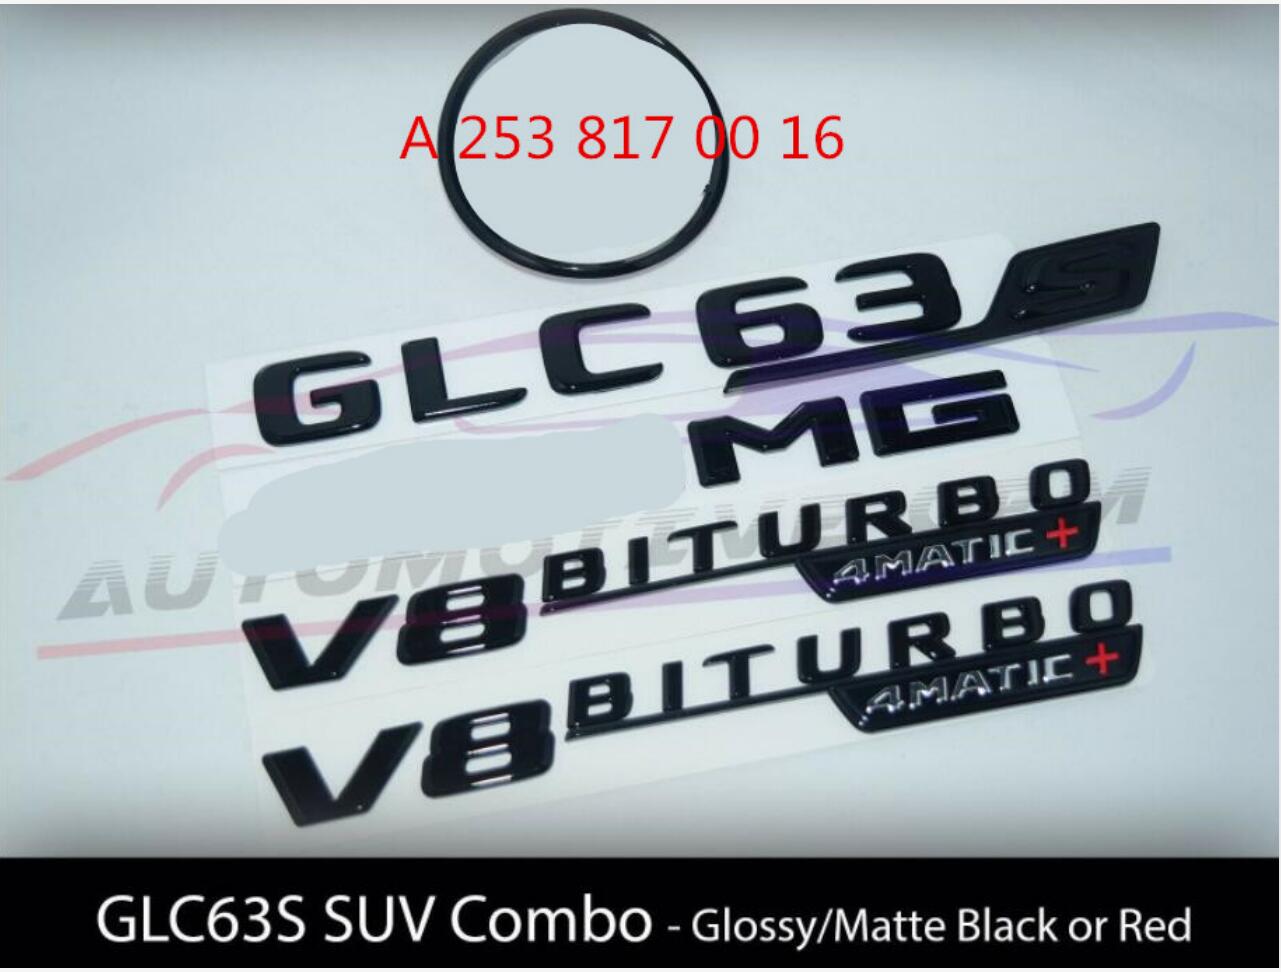 GLC63S SUV for AMG V8 BITURBO 4MATIC +  Ÿ..